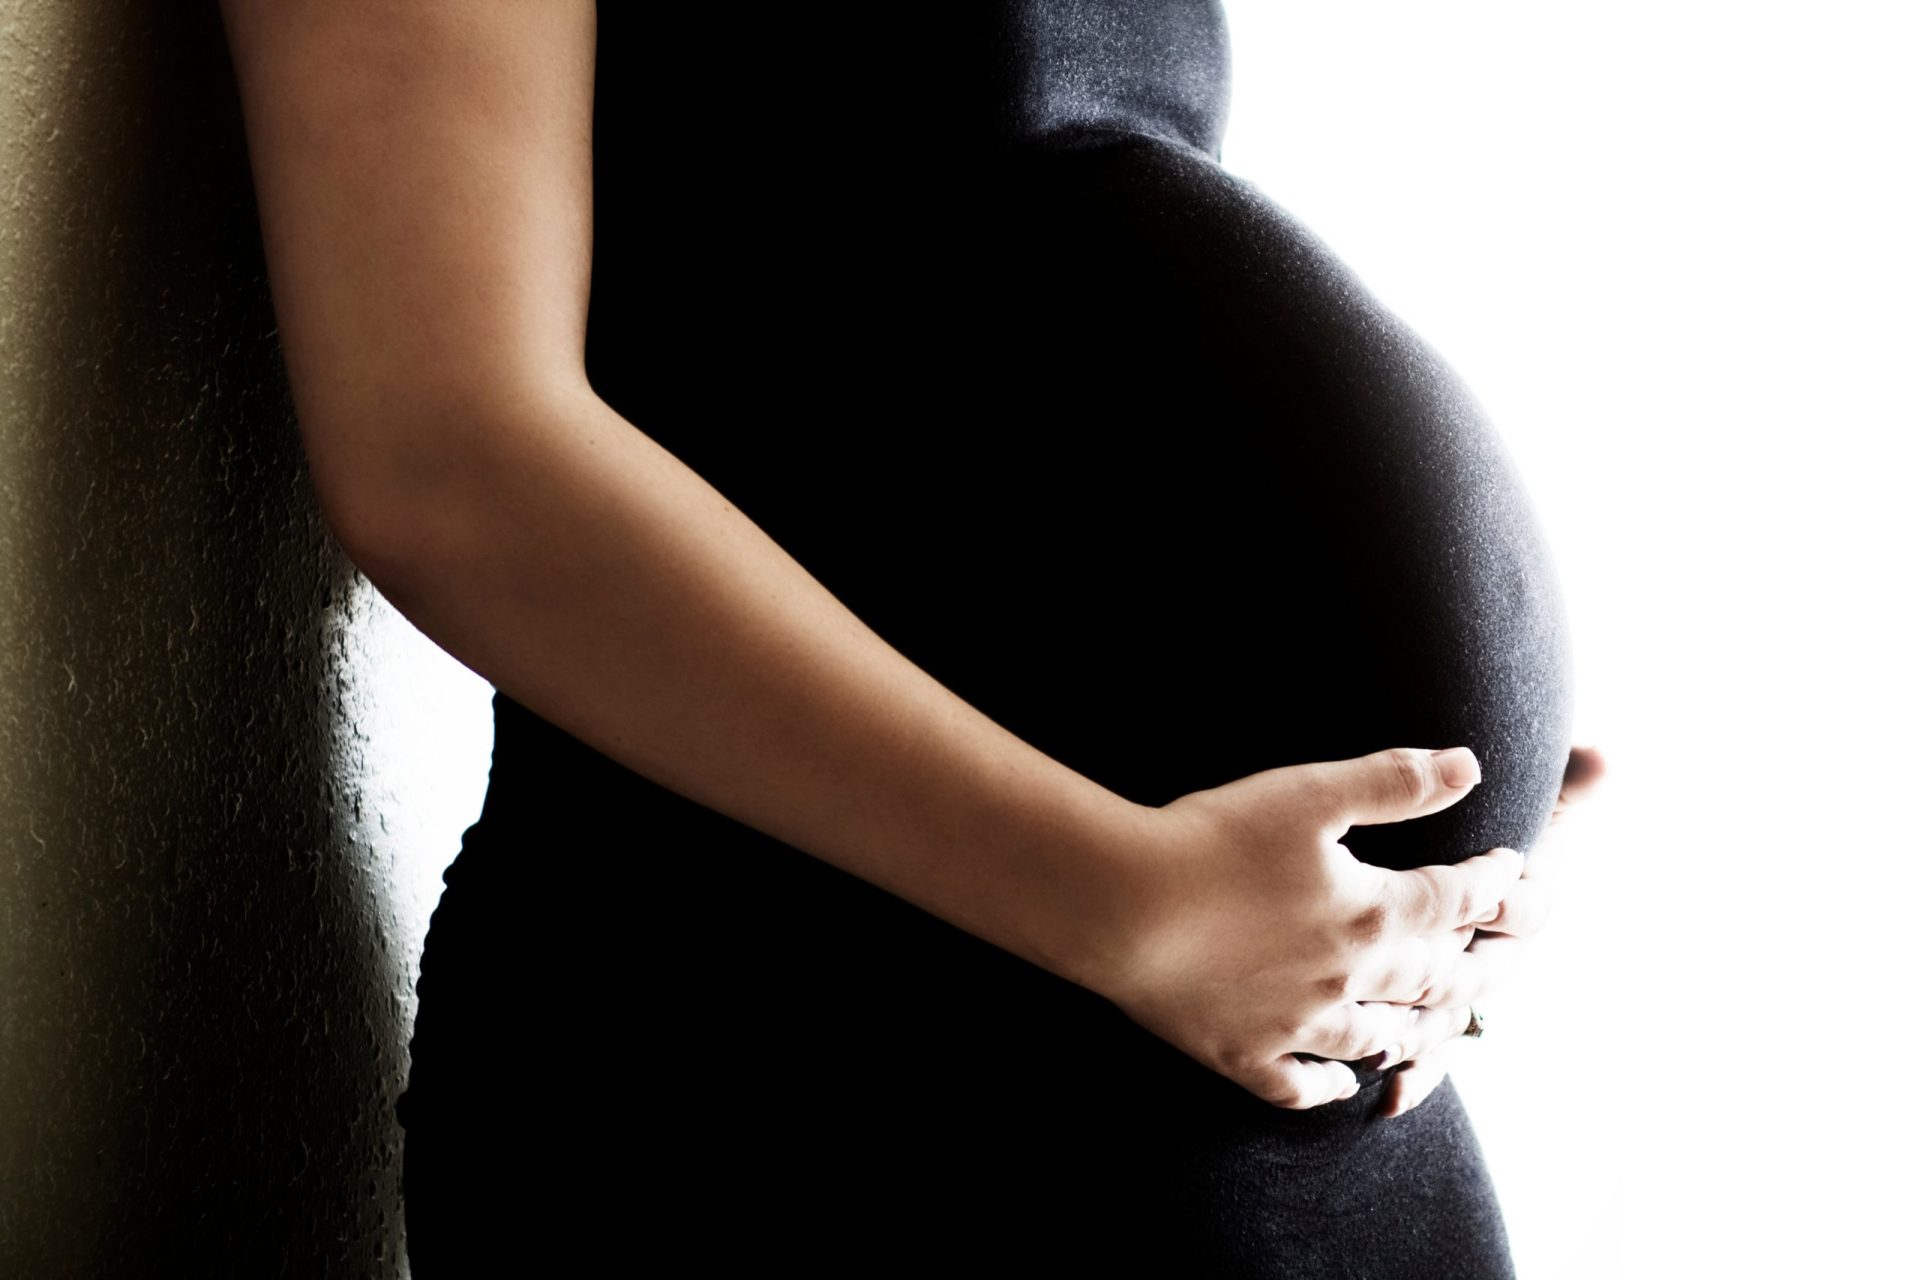 Mulher grávida de oito meses violentamente agredida no Funchal | VÍDEO